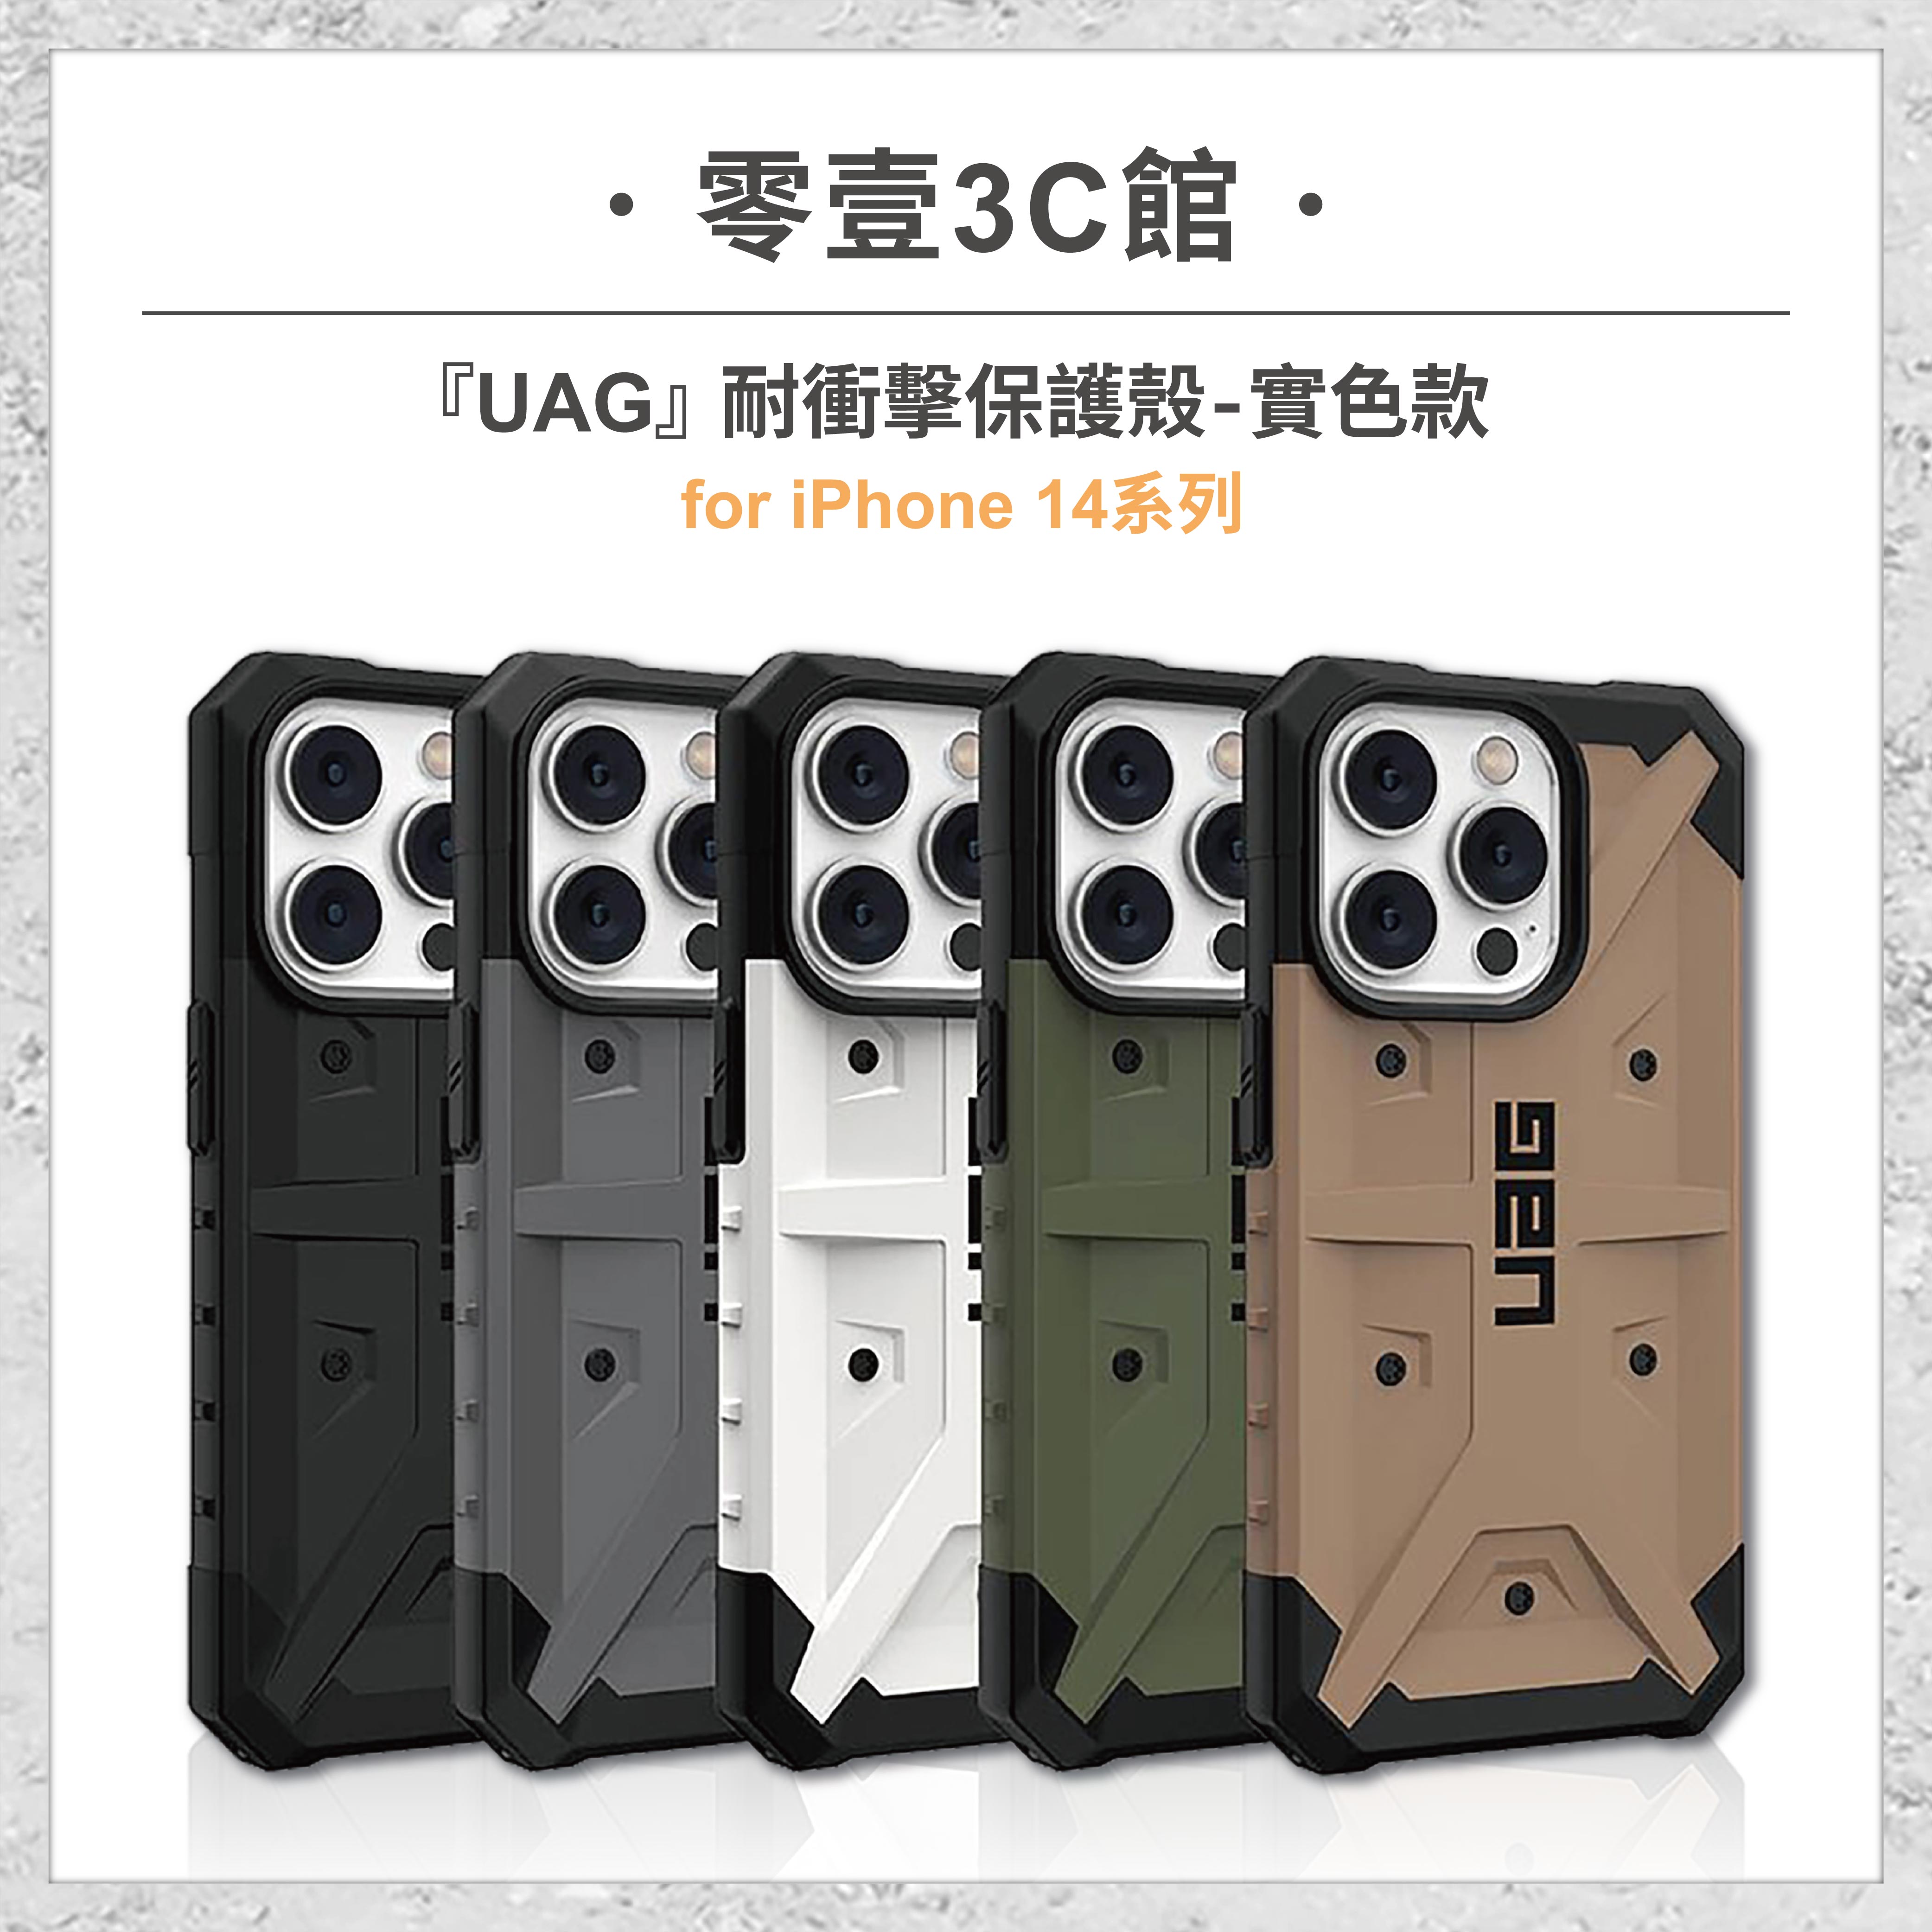 『UAG』耐衝擊保護殼(實色款) for iPhone14系列 14 14 Plus 14 Pro 14 Pro Max 手機防摔保護殼